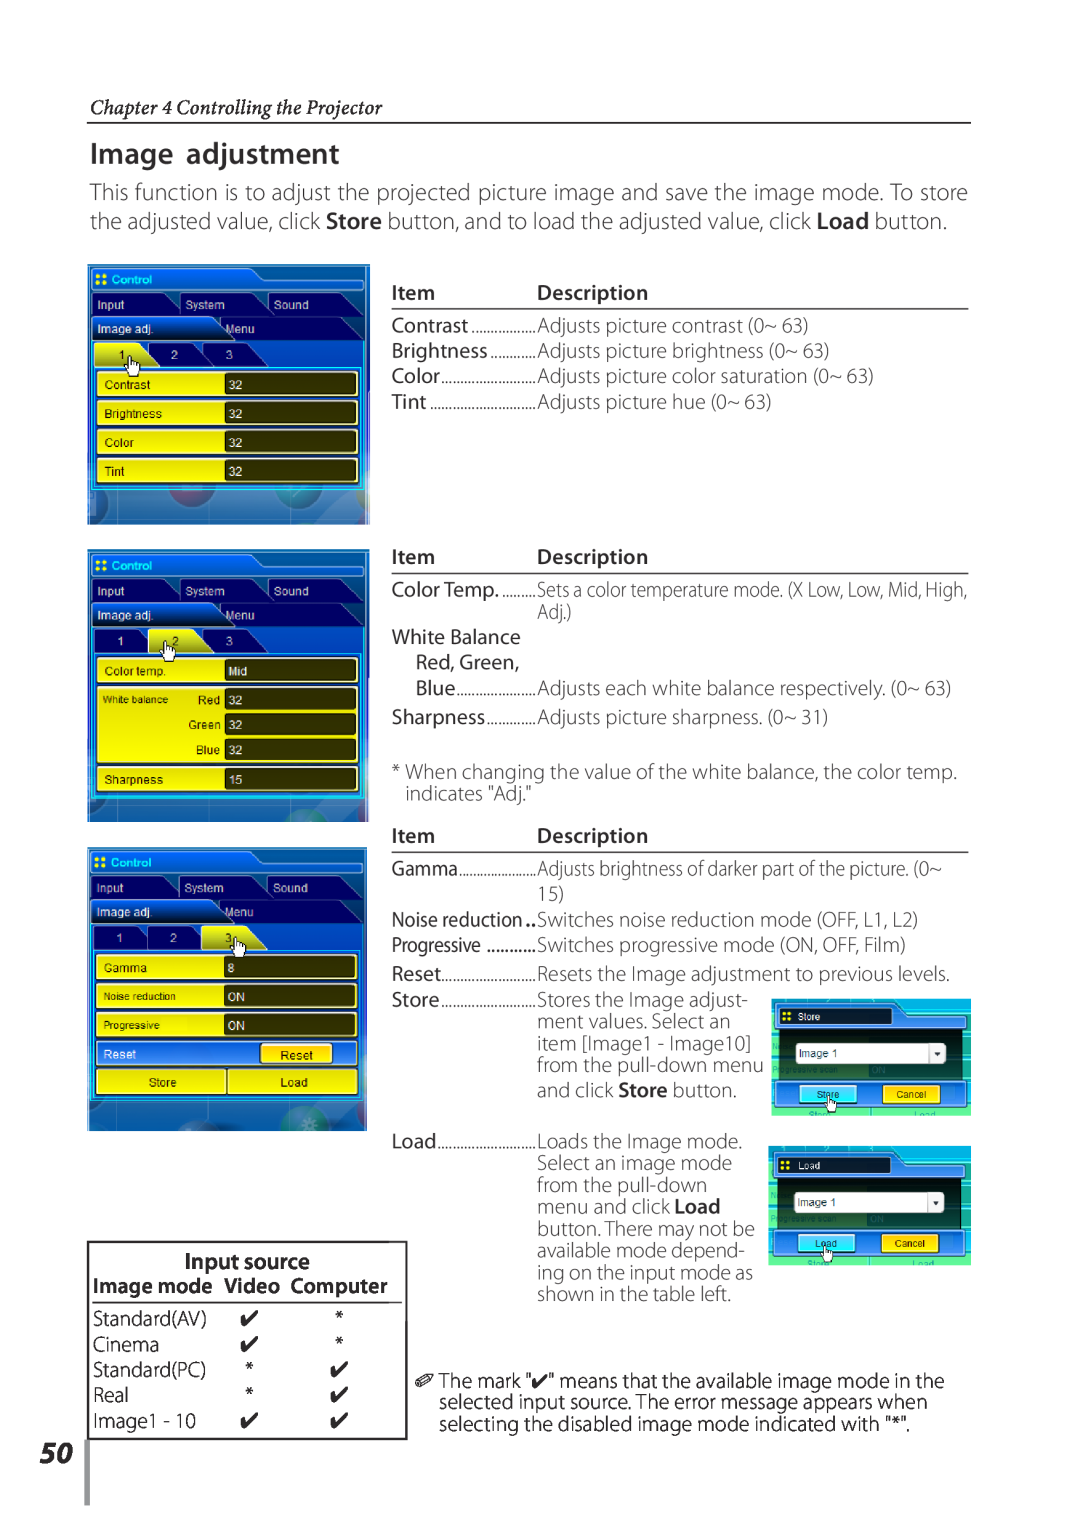 Sanyo POA-PN03C owner manual Image adjustment, Controlling the Projector, Item, Description, Input source 